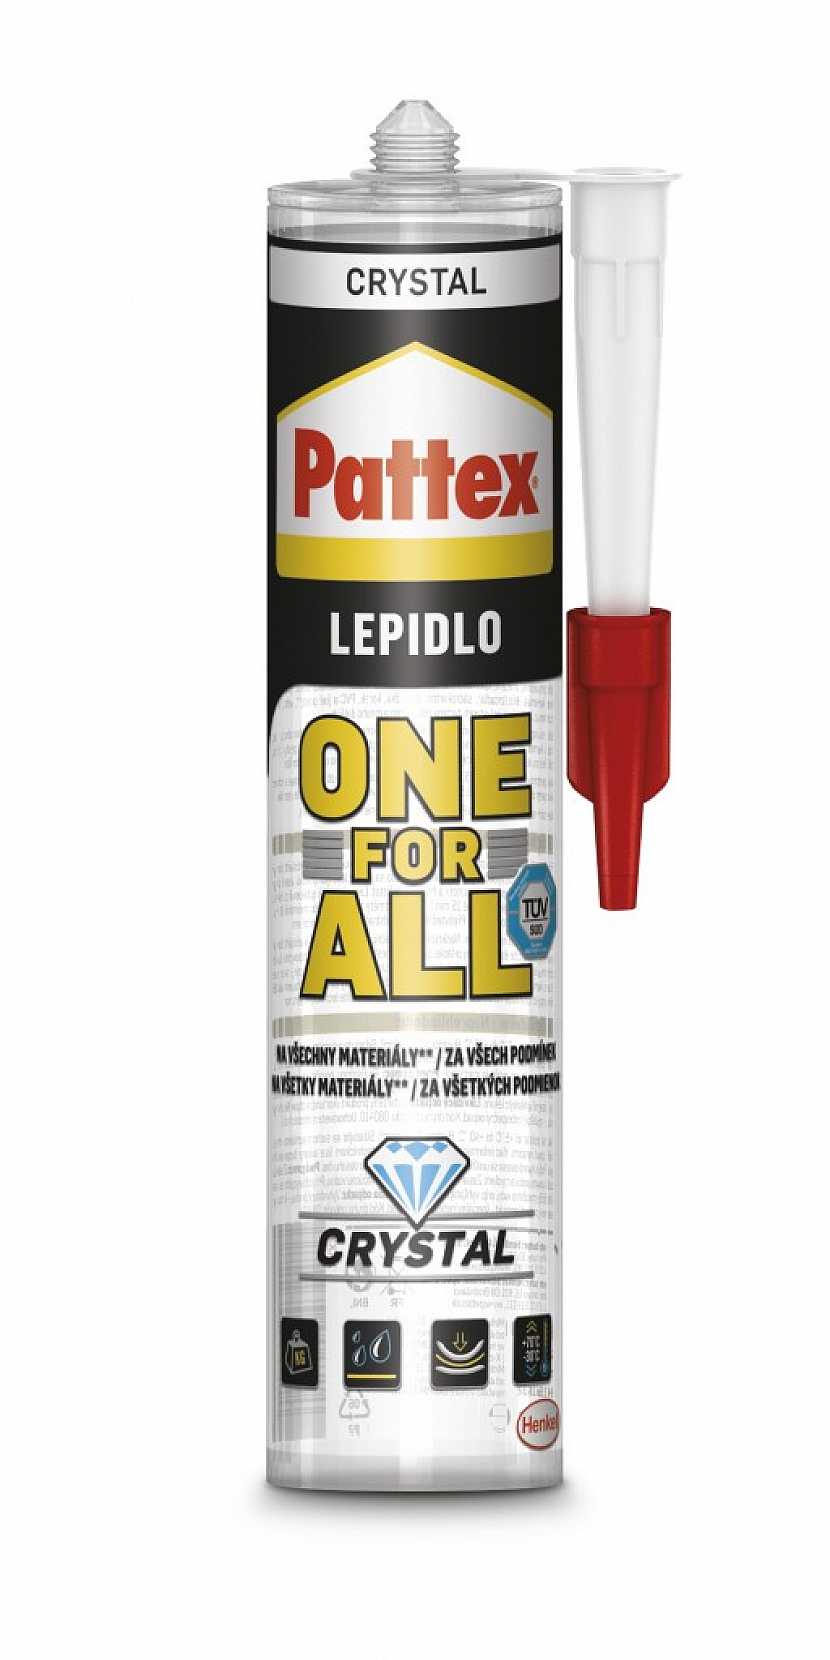 Lepidlo Pattex ONE FOR ALL CRYSTAL -  vlastnosti